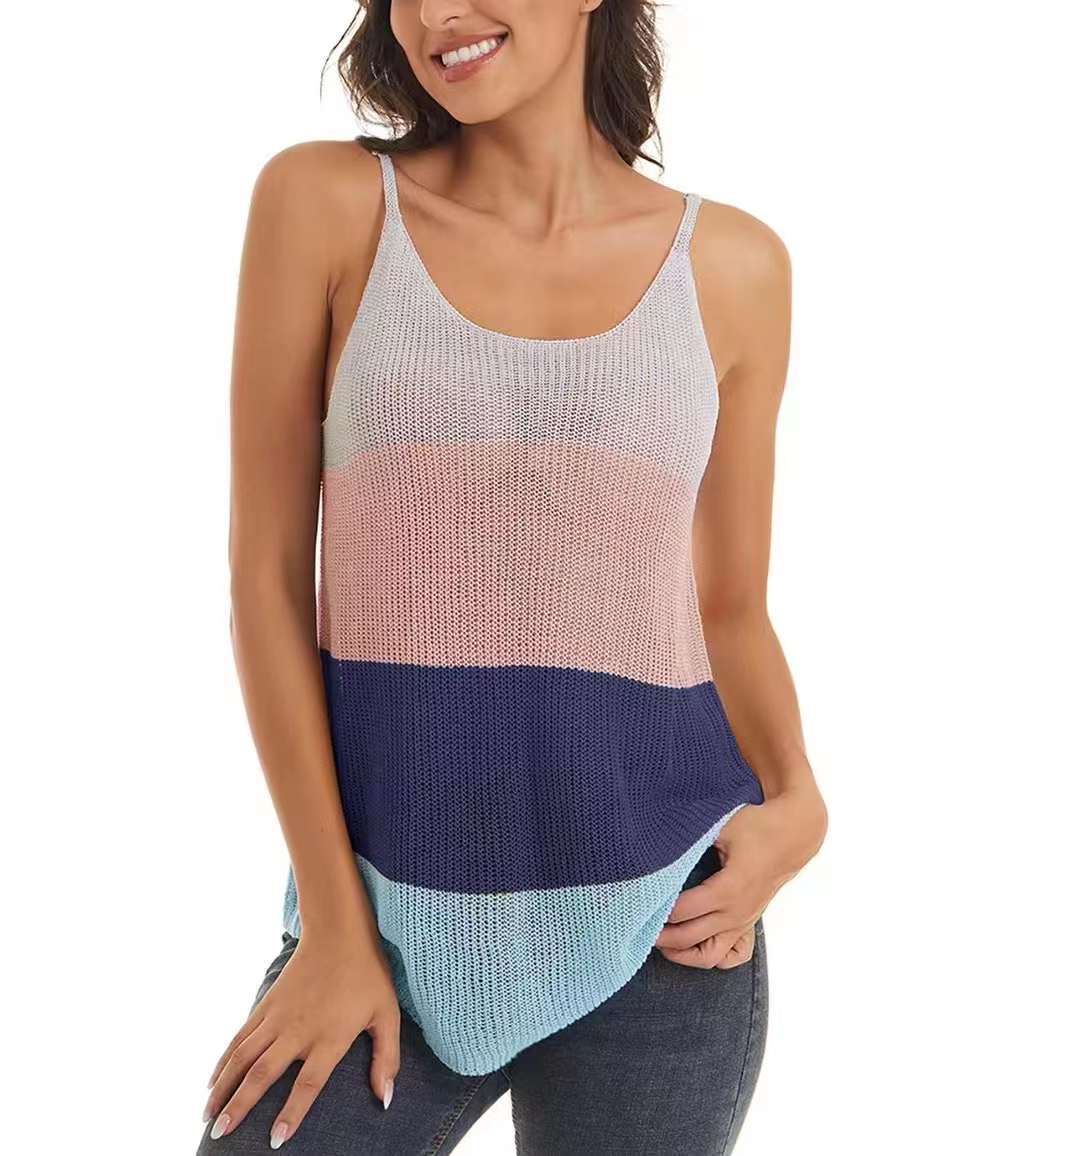 Stockpapa Apparel Ladies Contrast Color Knit Tanktop